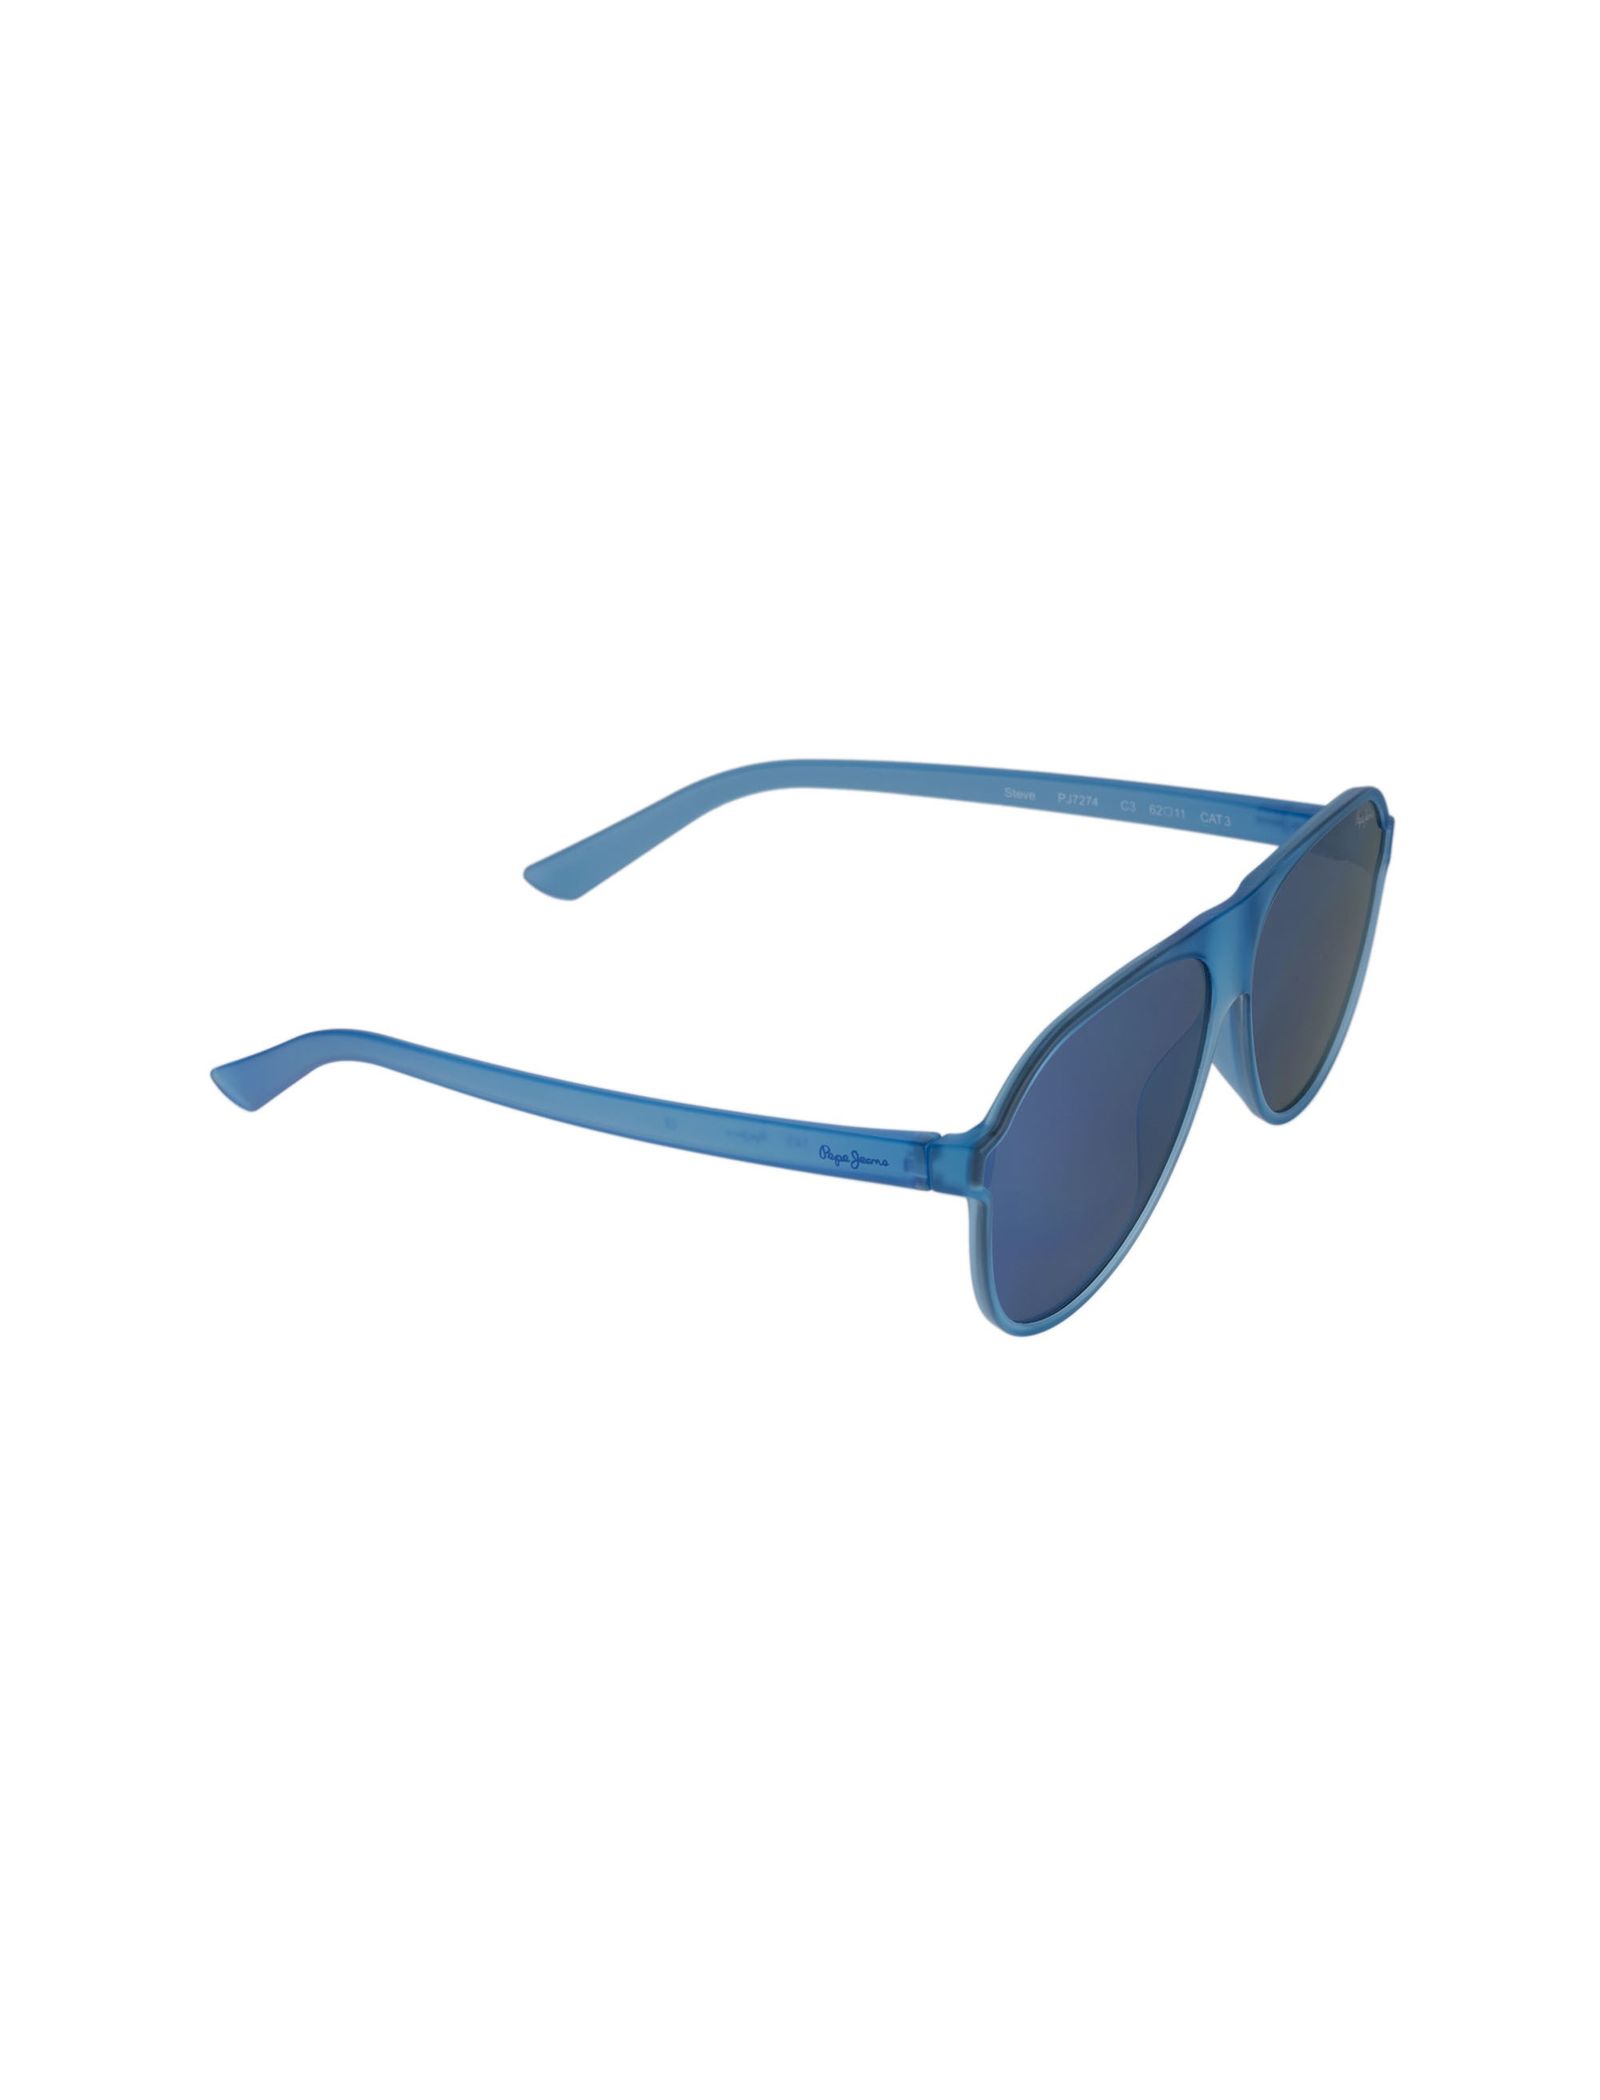 عینک آفتابی خلبانی زنانه - پپه جینز - آبي روشن - 3